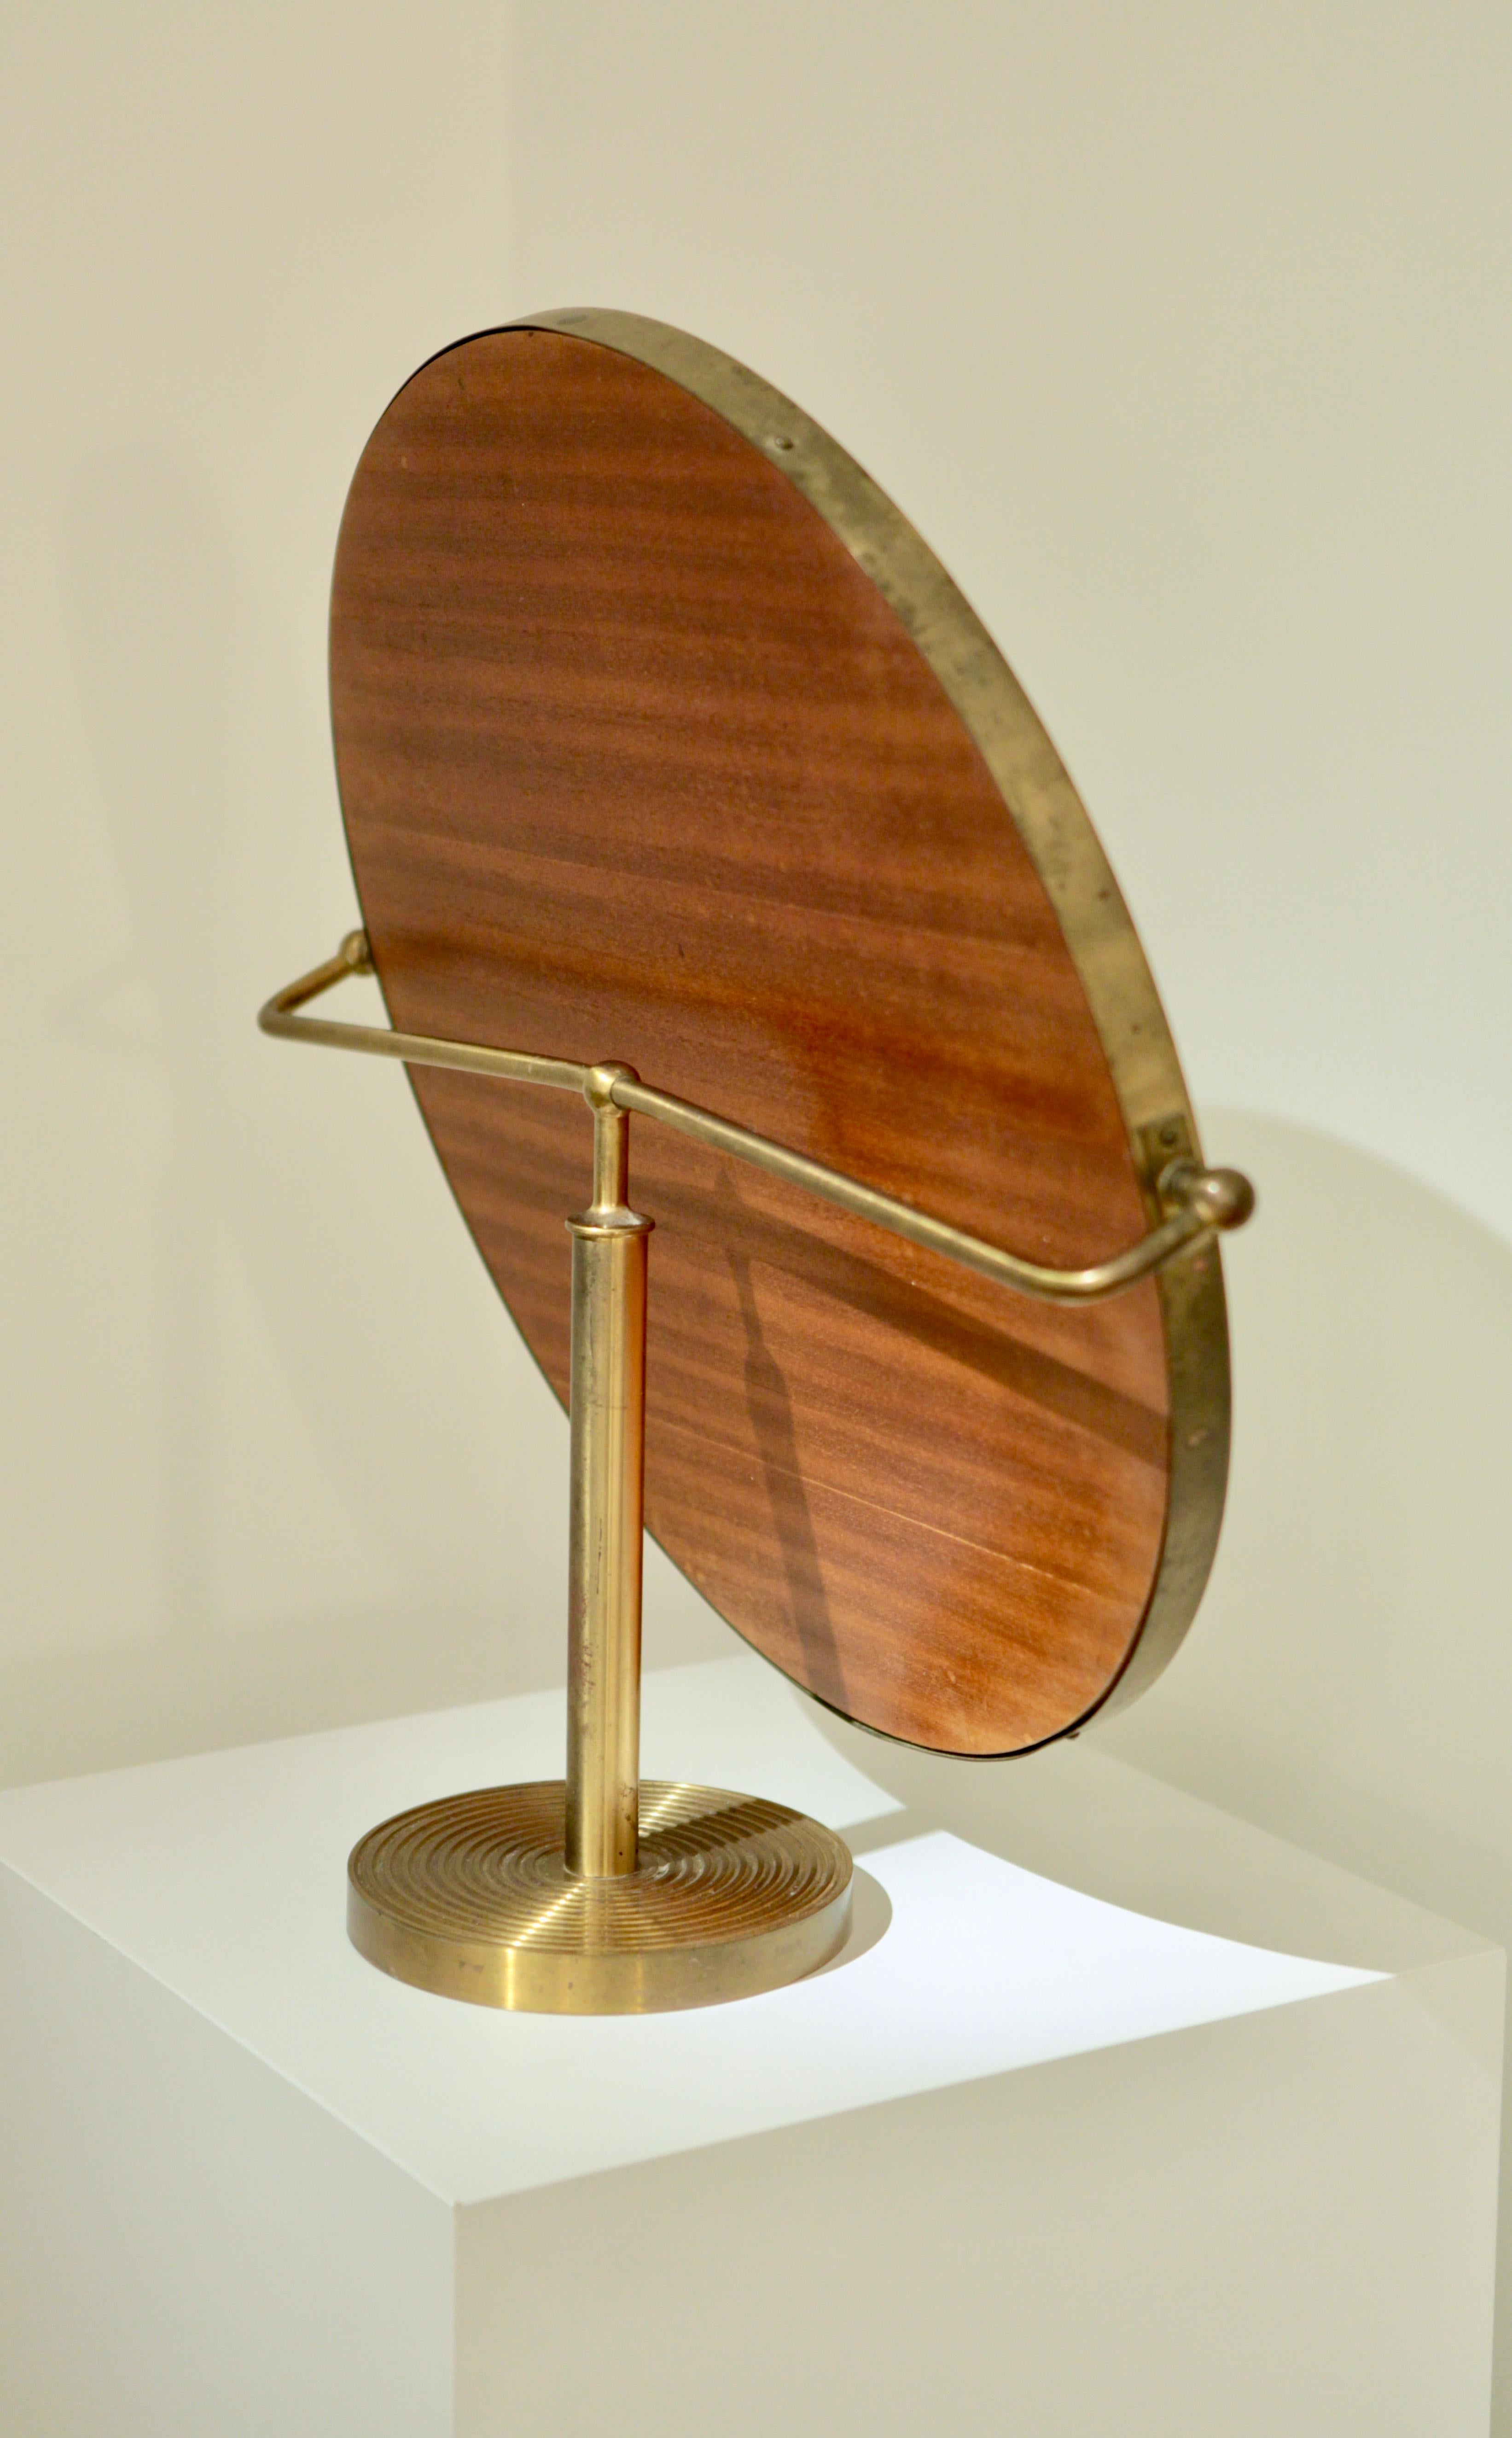 Josef Frank, „Table Mirror“ Svenskt Tenn, Schweden, 1934 (Skandinavische Moderne)